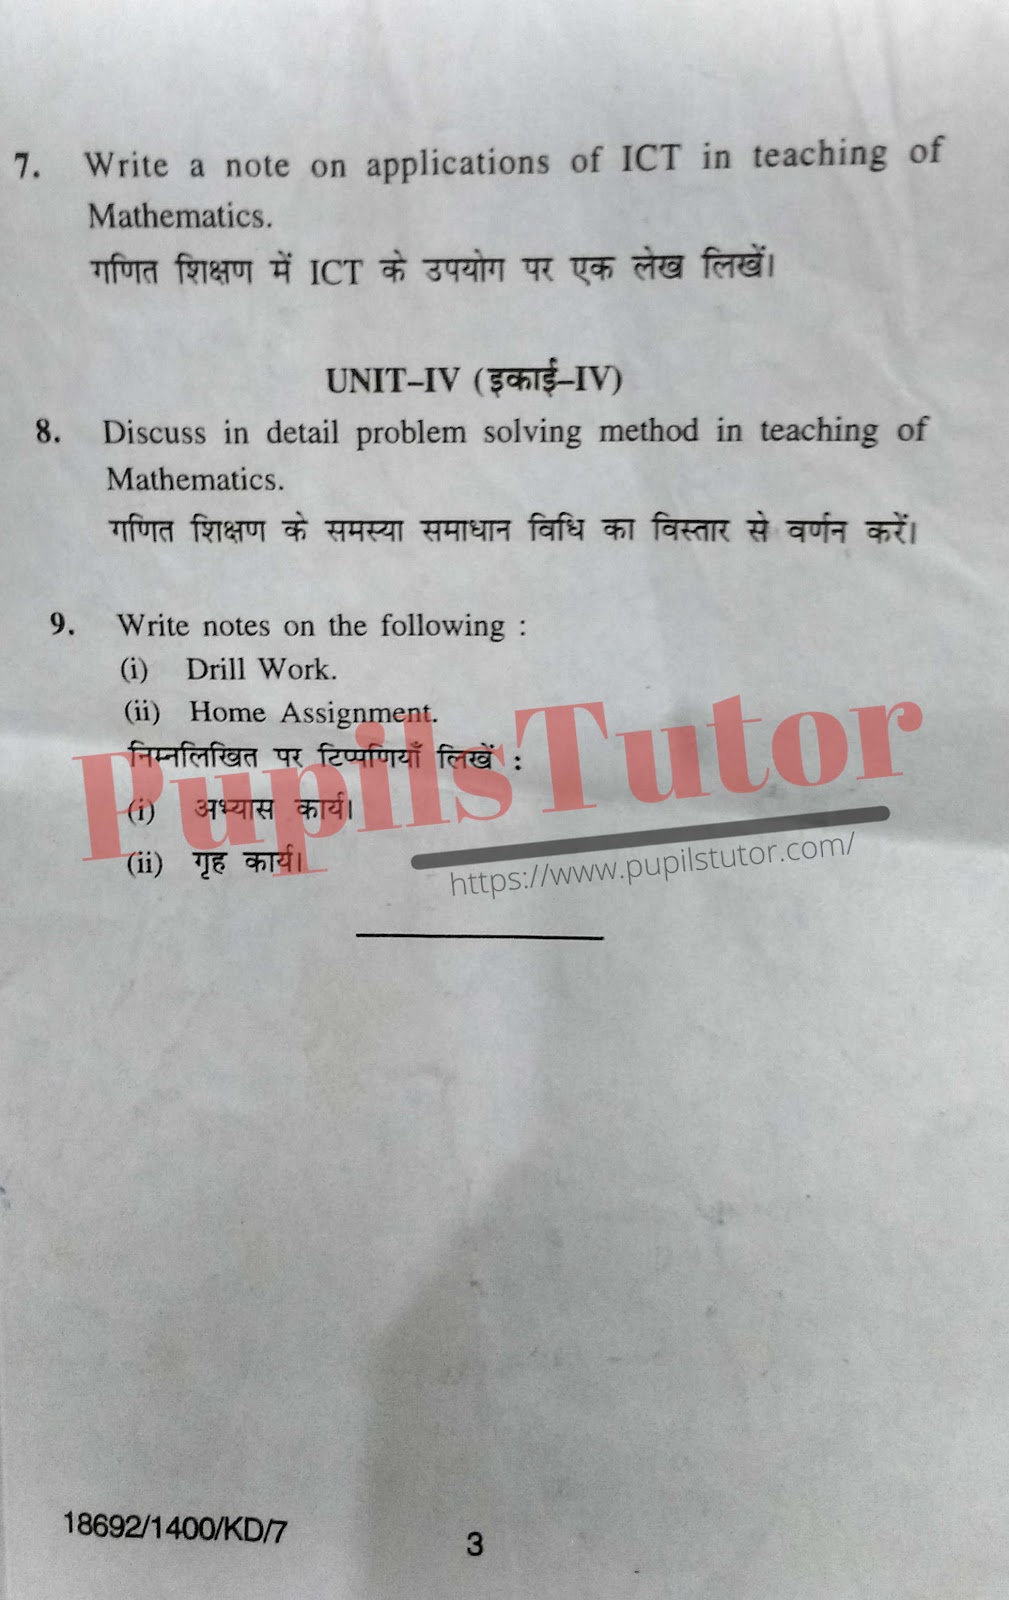 Free Download PDF Of Kurukshetra University (KUK) B.Ed First Year Latest Question Paper For Pedagogy Of Mathematics Subject (Page 3) - https://www.pupilstutor.com